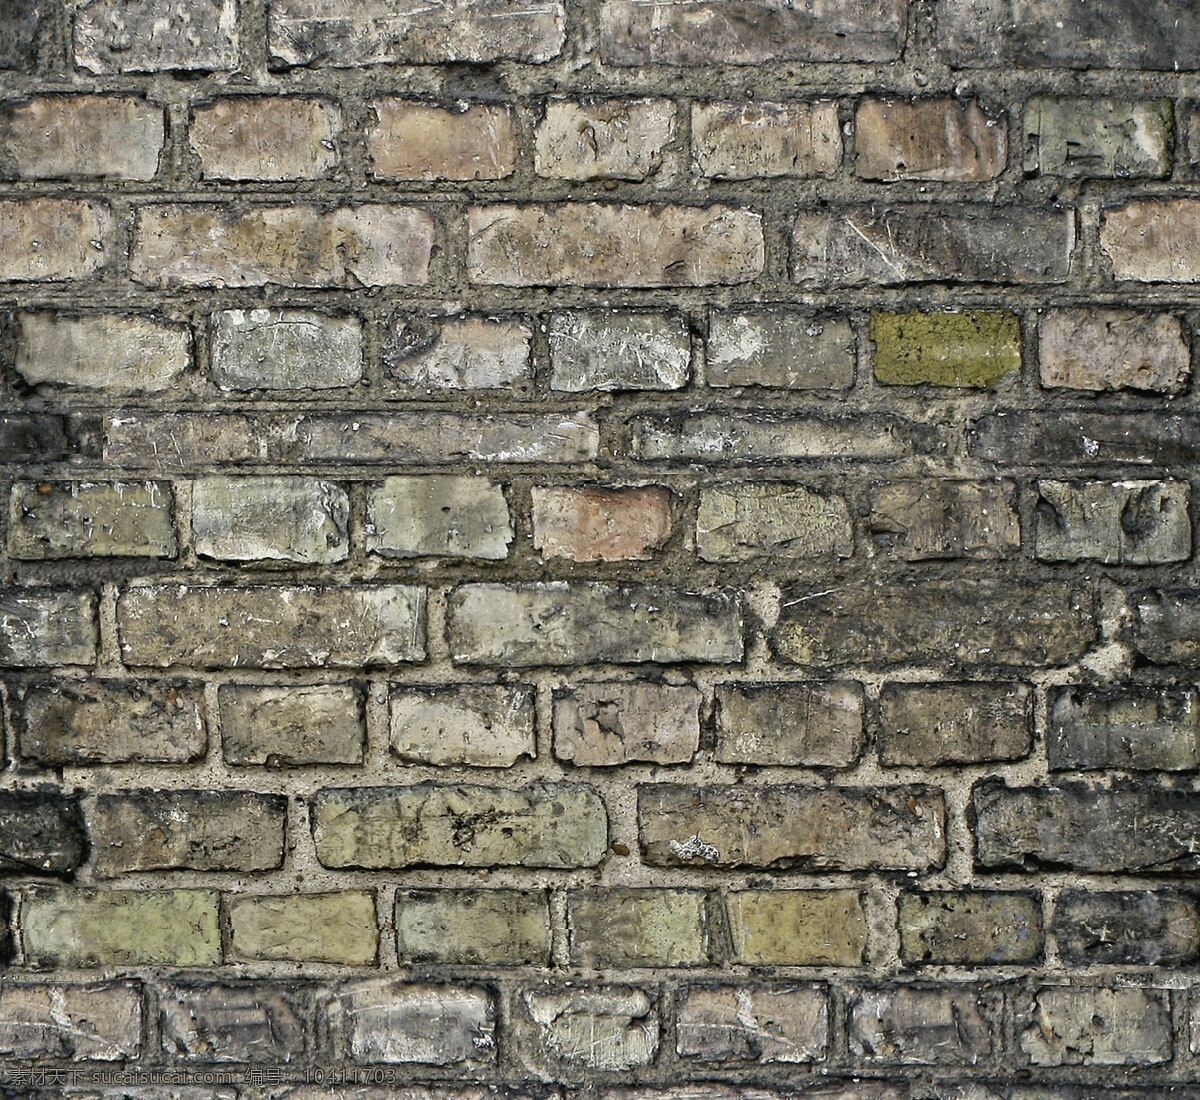 vray 墙砖 材质 max9 有贴图 石料 工字拼 脏砖 旧砖 陈旧砖 3d模型素材 材质贴图